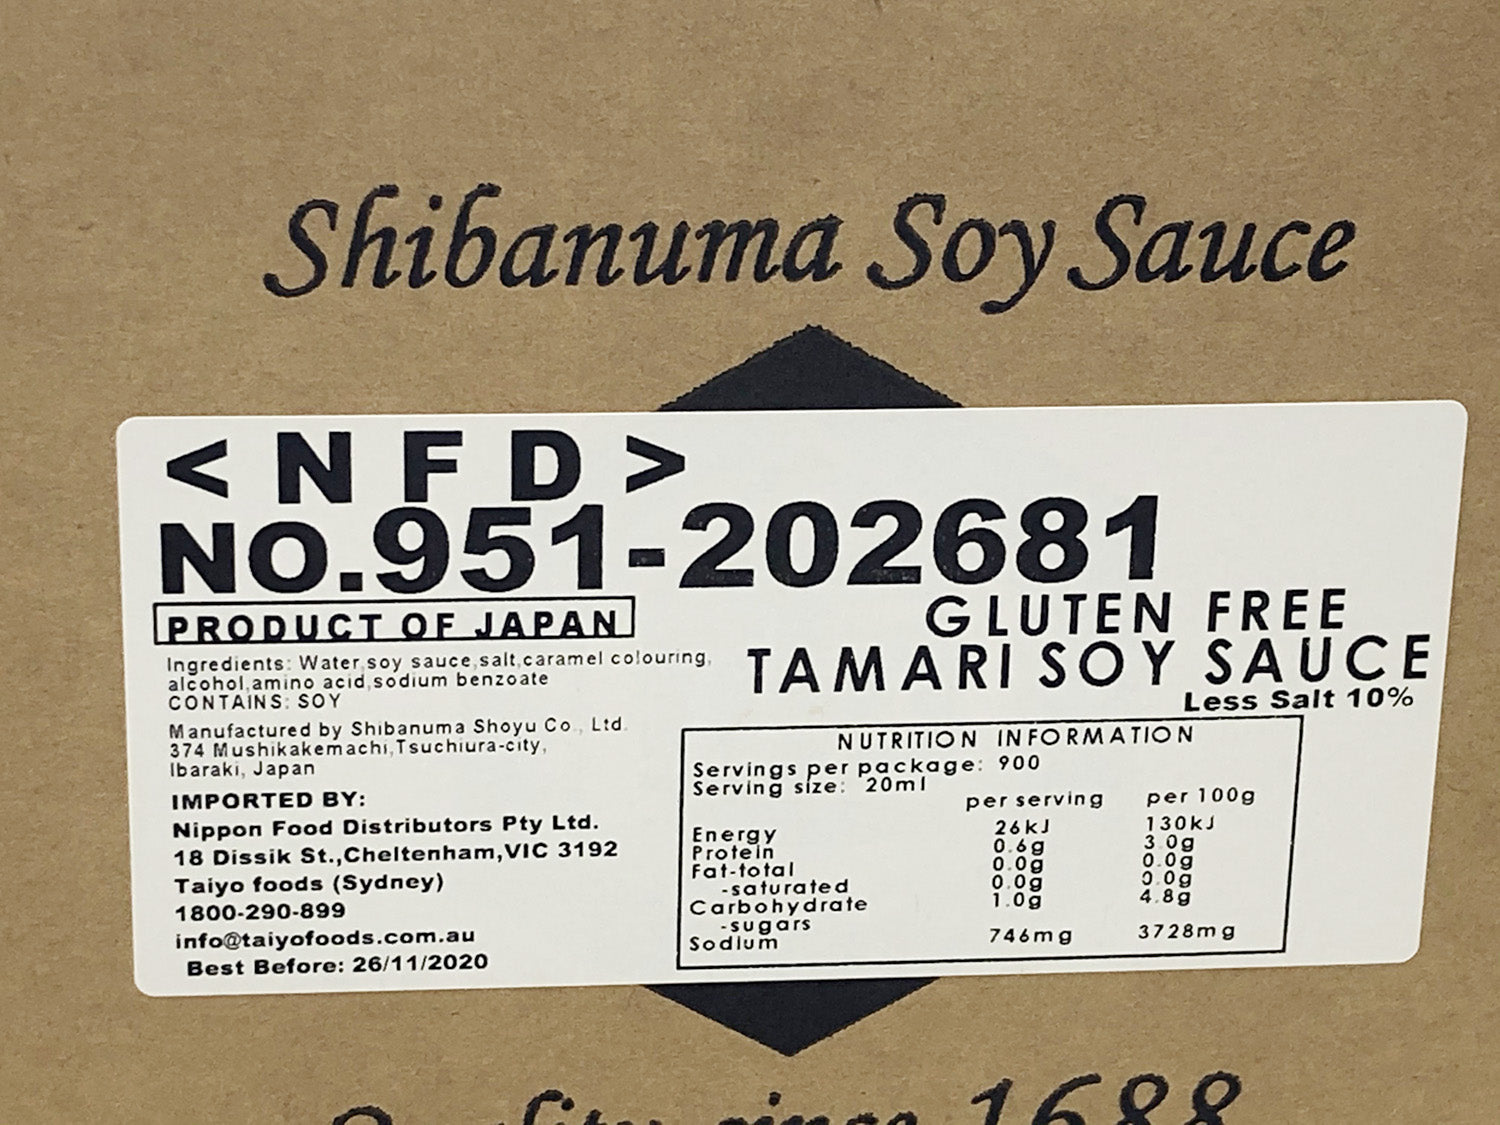 GLUTEN FREE TAMARI SOY SAUCE LESS SALT 10% 18L